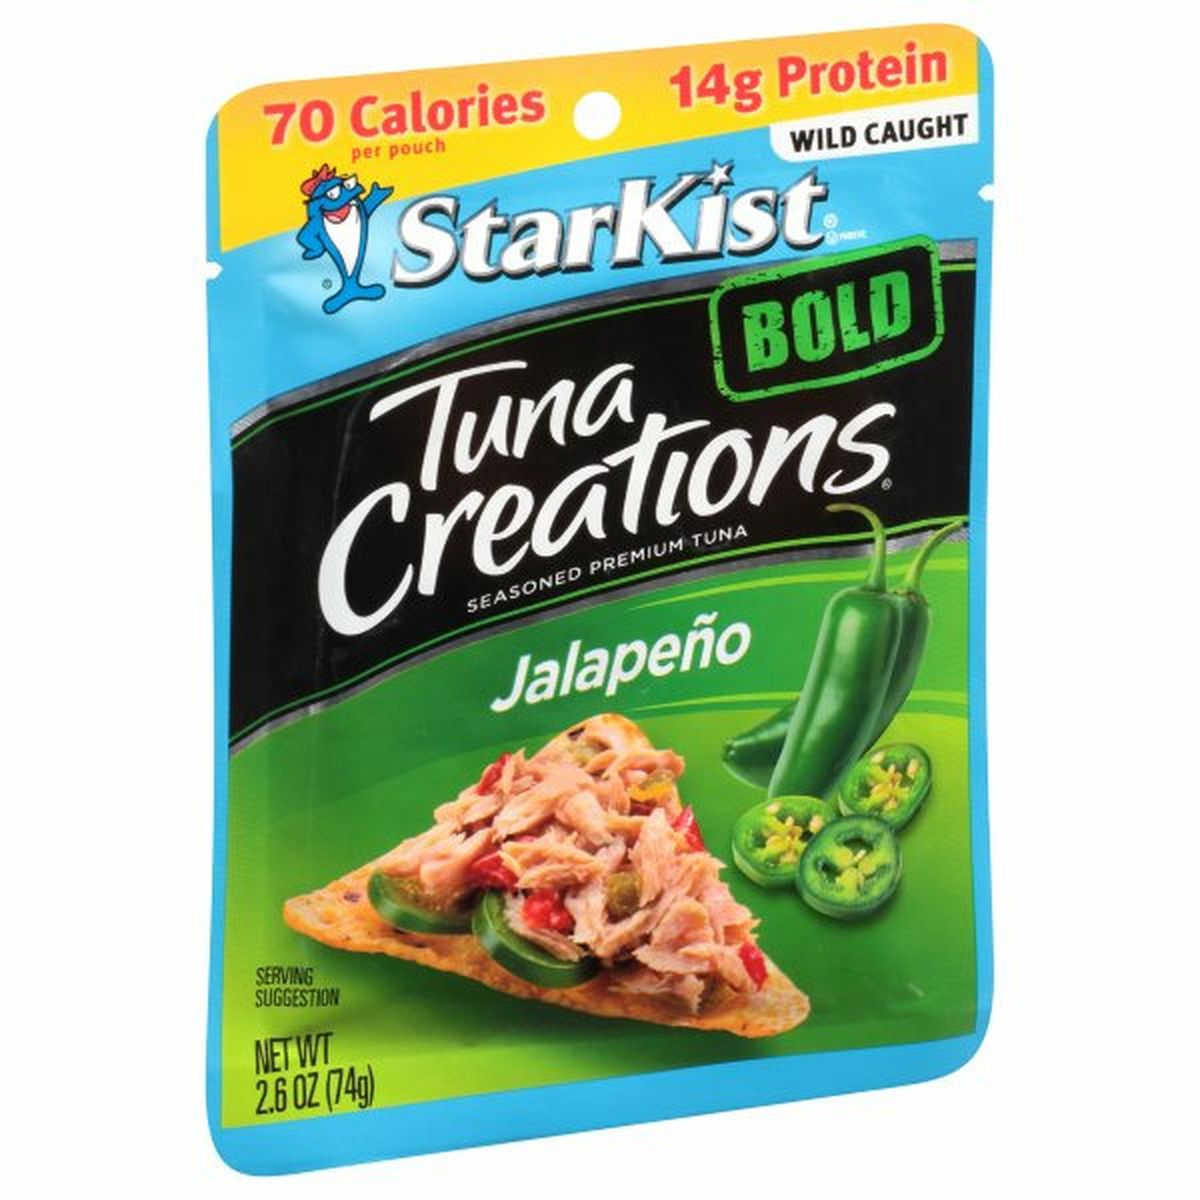 Calories in StarKist Tuna Creations Tuna, Premium, Jalapeno, Bold, Seasoned